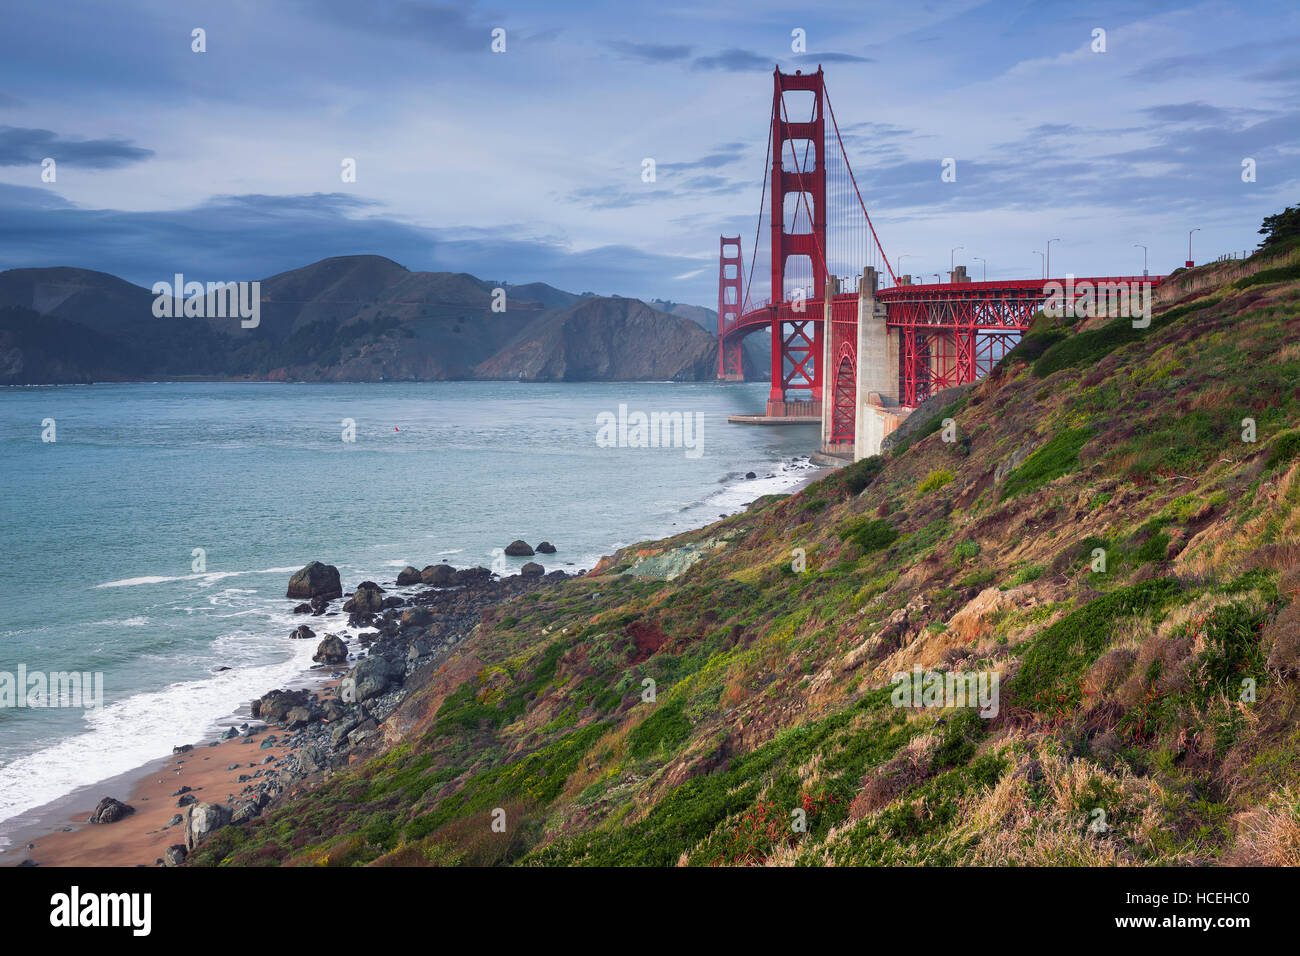 Golden Gate Bridge. Image of Golden Gate Bridge in San Francisco, California at sunset. Stock Photo